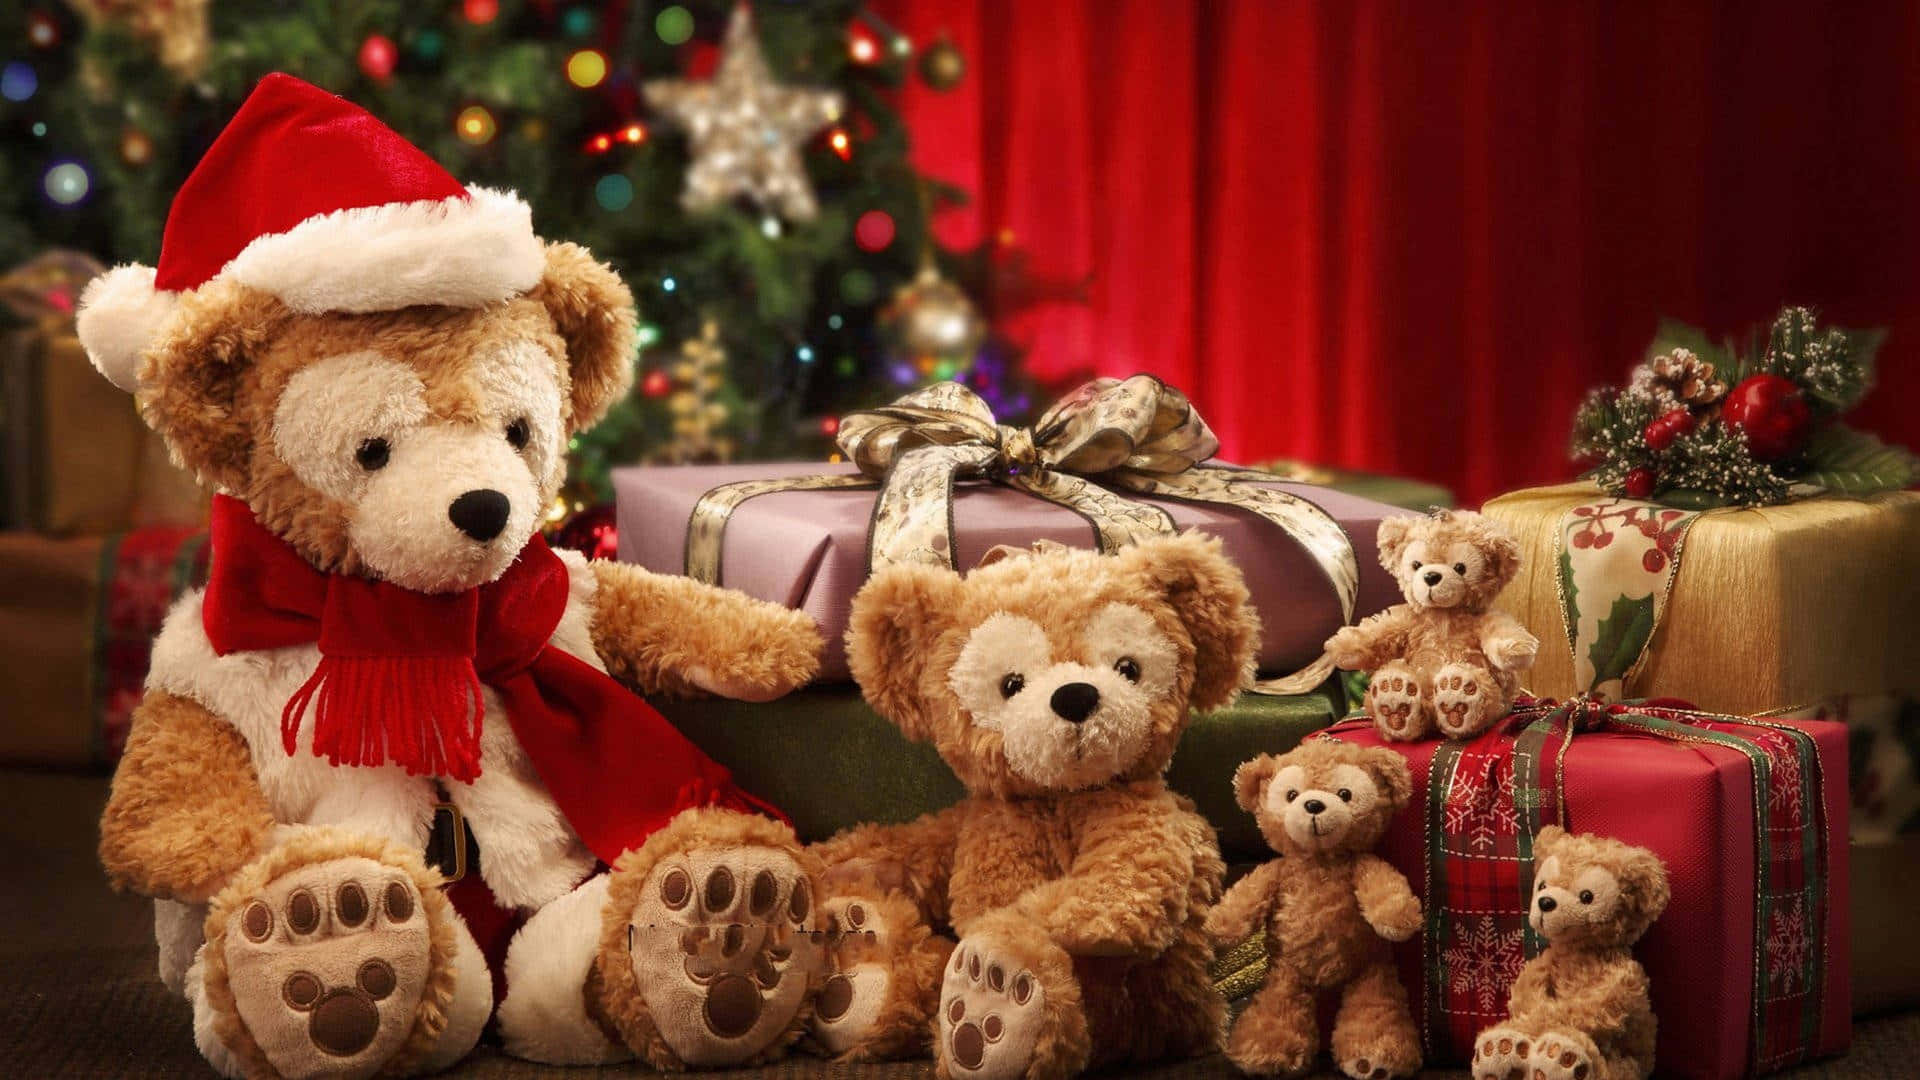 Simple Aesthetic Cute Christmas Teddy Bears Wallpaper